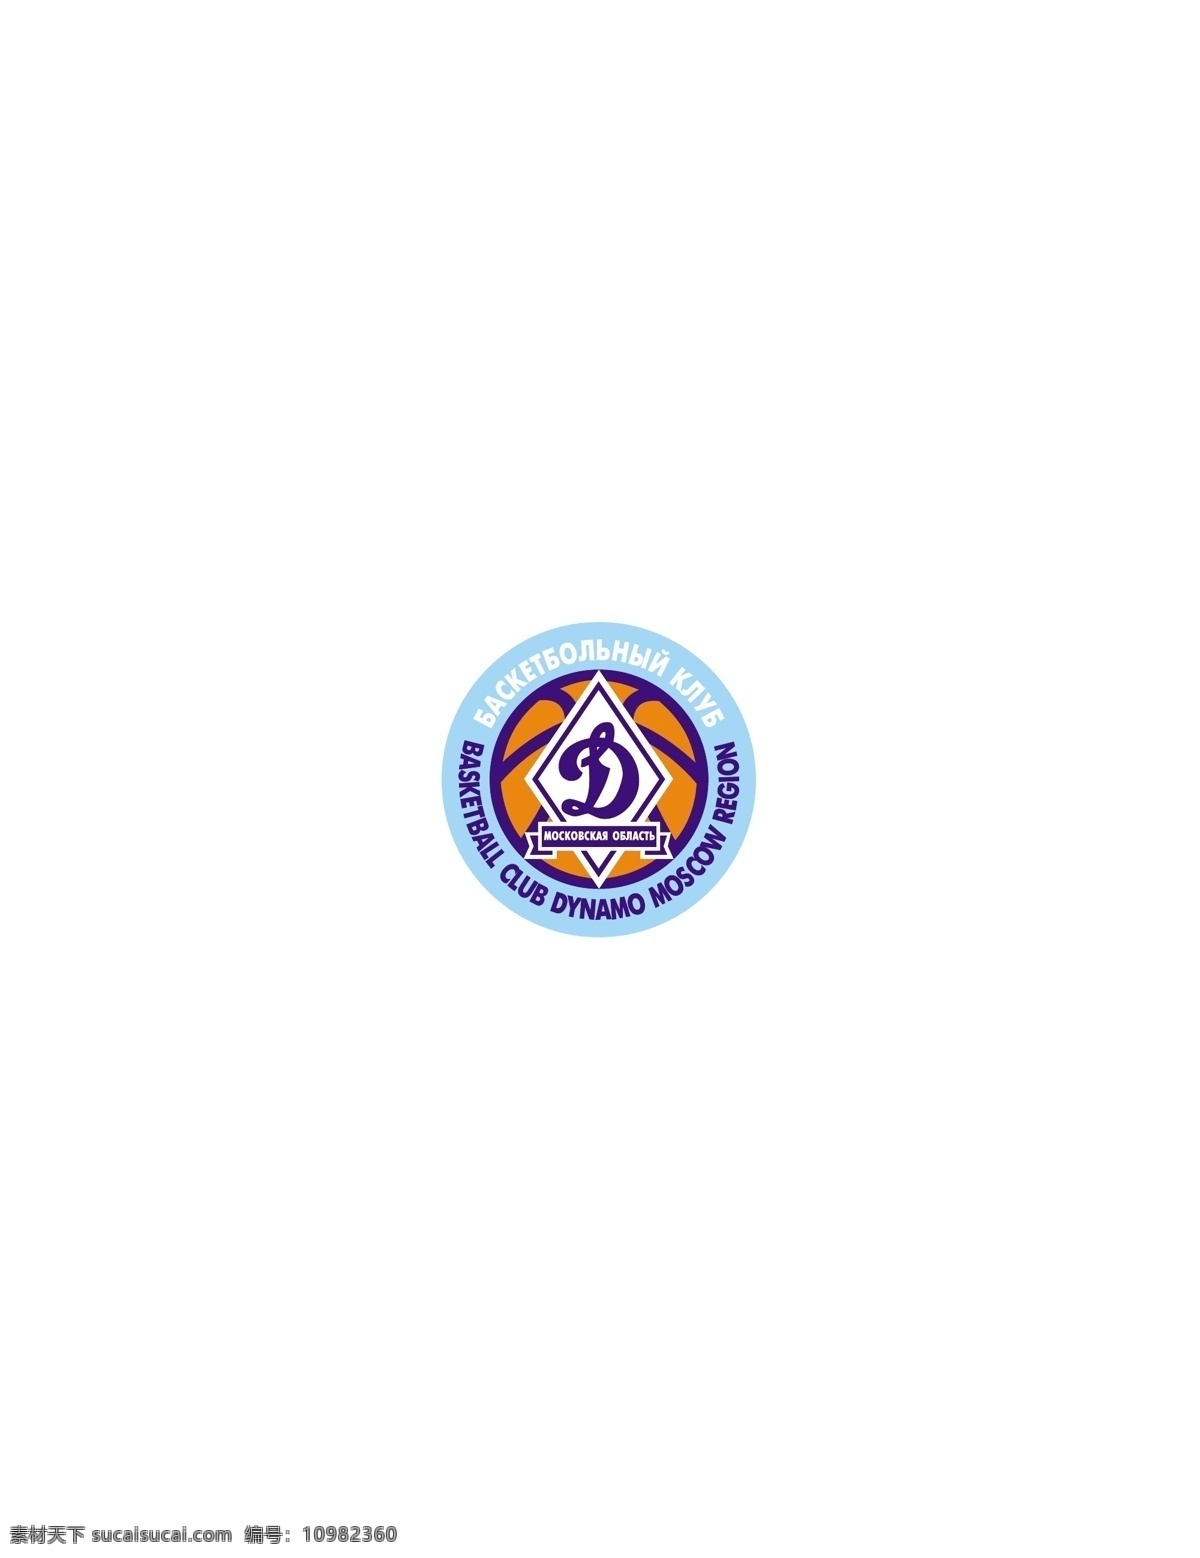 basketball club dynamo moscow region logo 设计欣赏 标志设计 欣赏 矢量下载 网页矢量 商业矢量 logo大全 红色